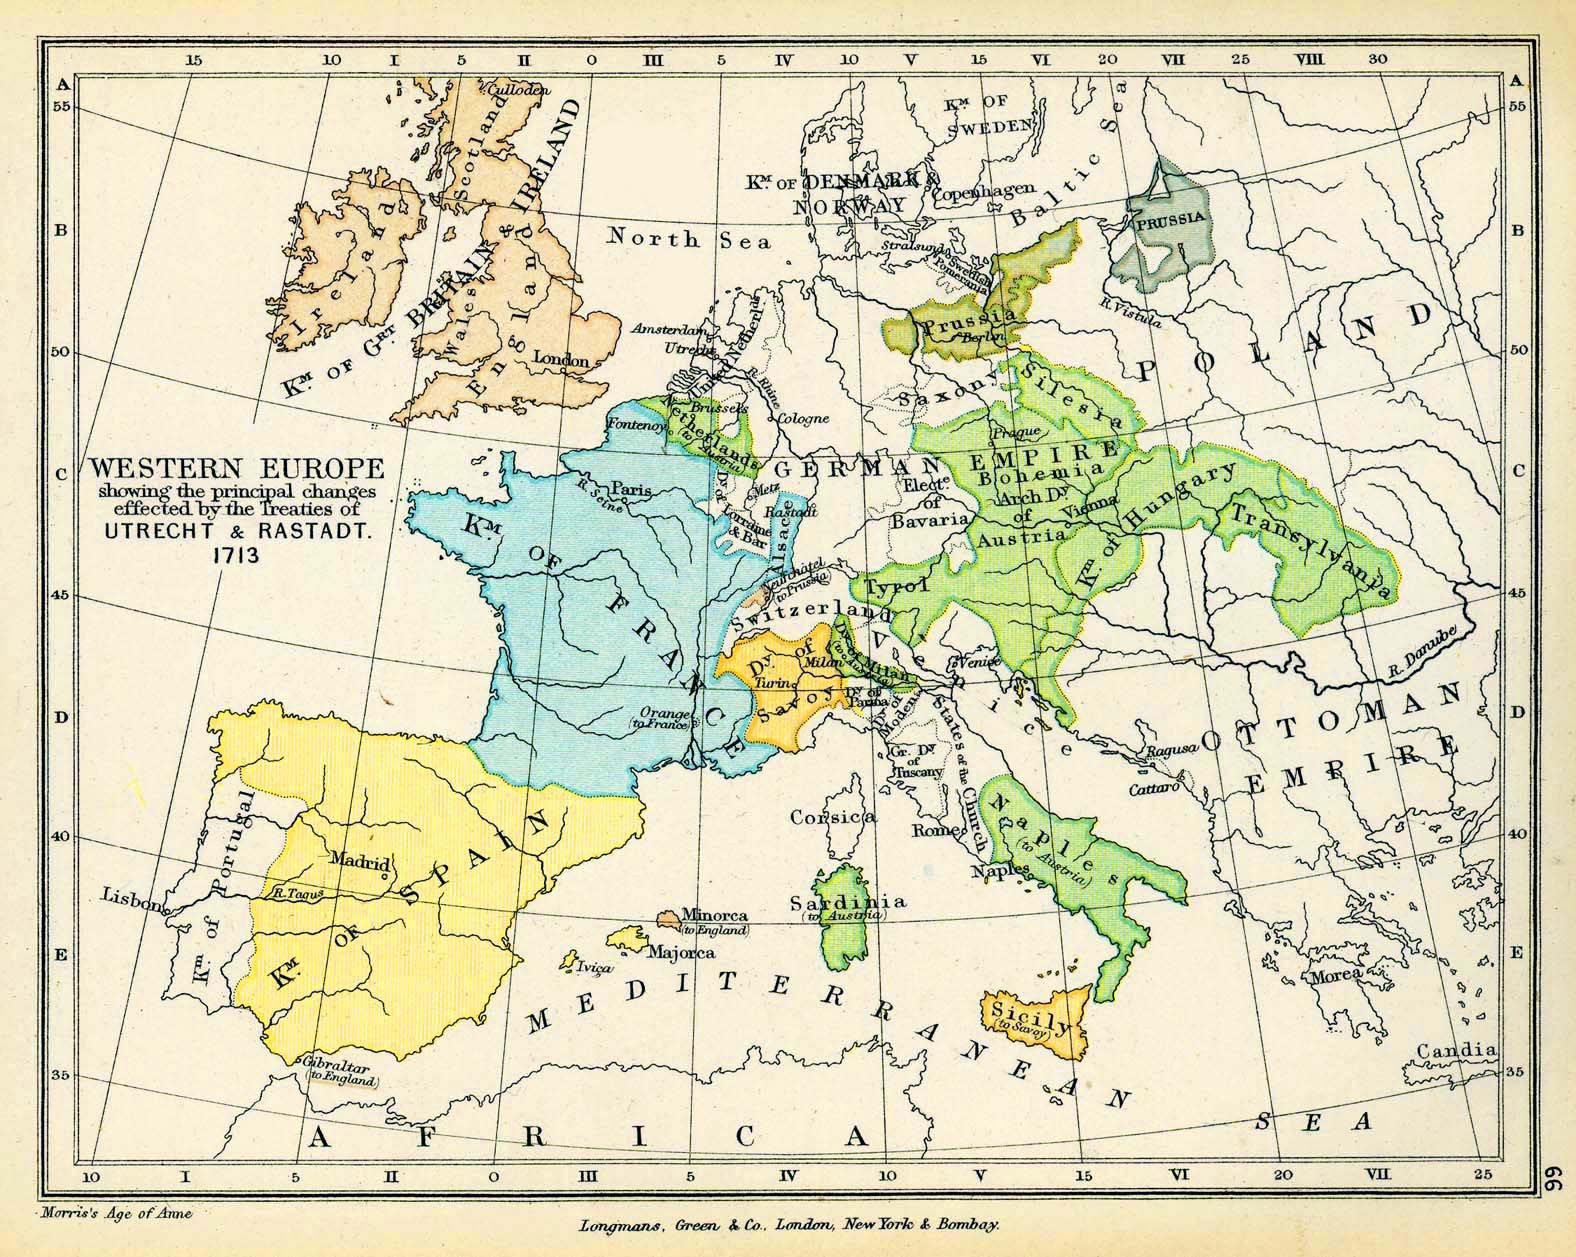 Map of Western Europe 1713: The Treaties of Utrecht and Rastatt